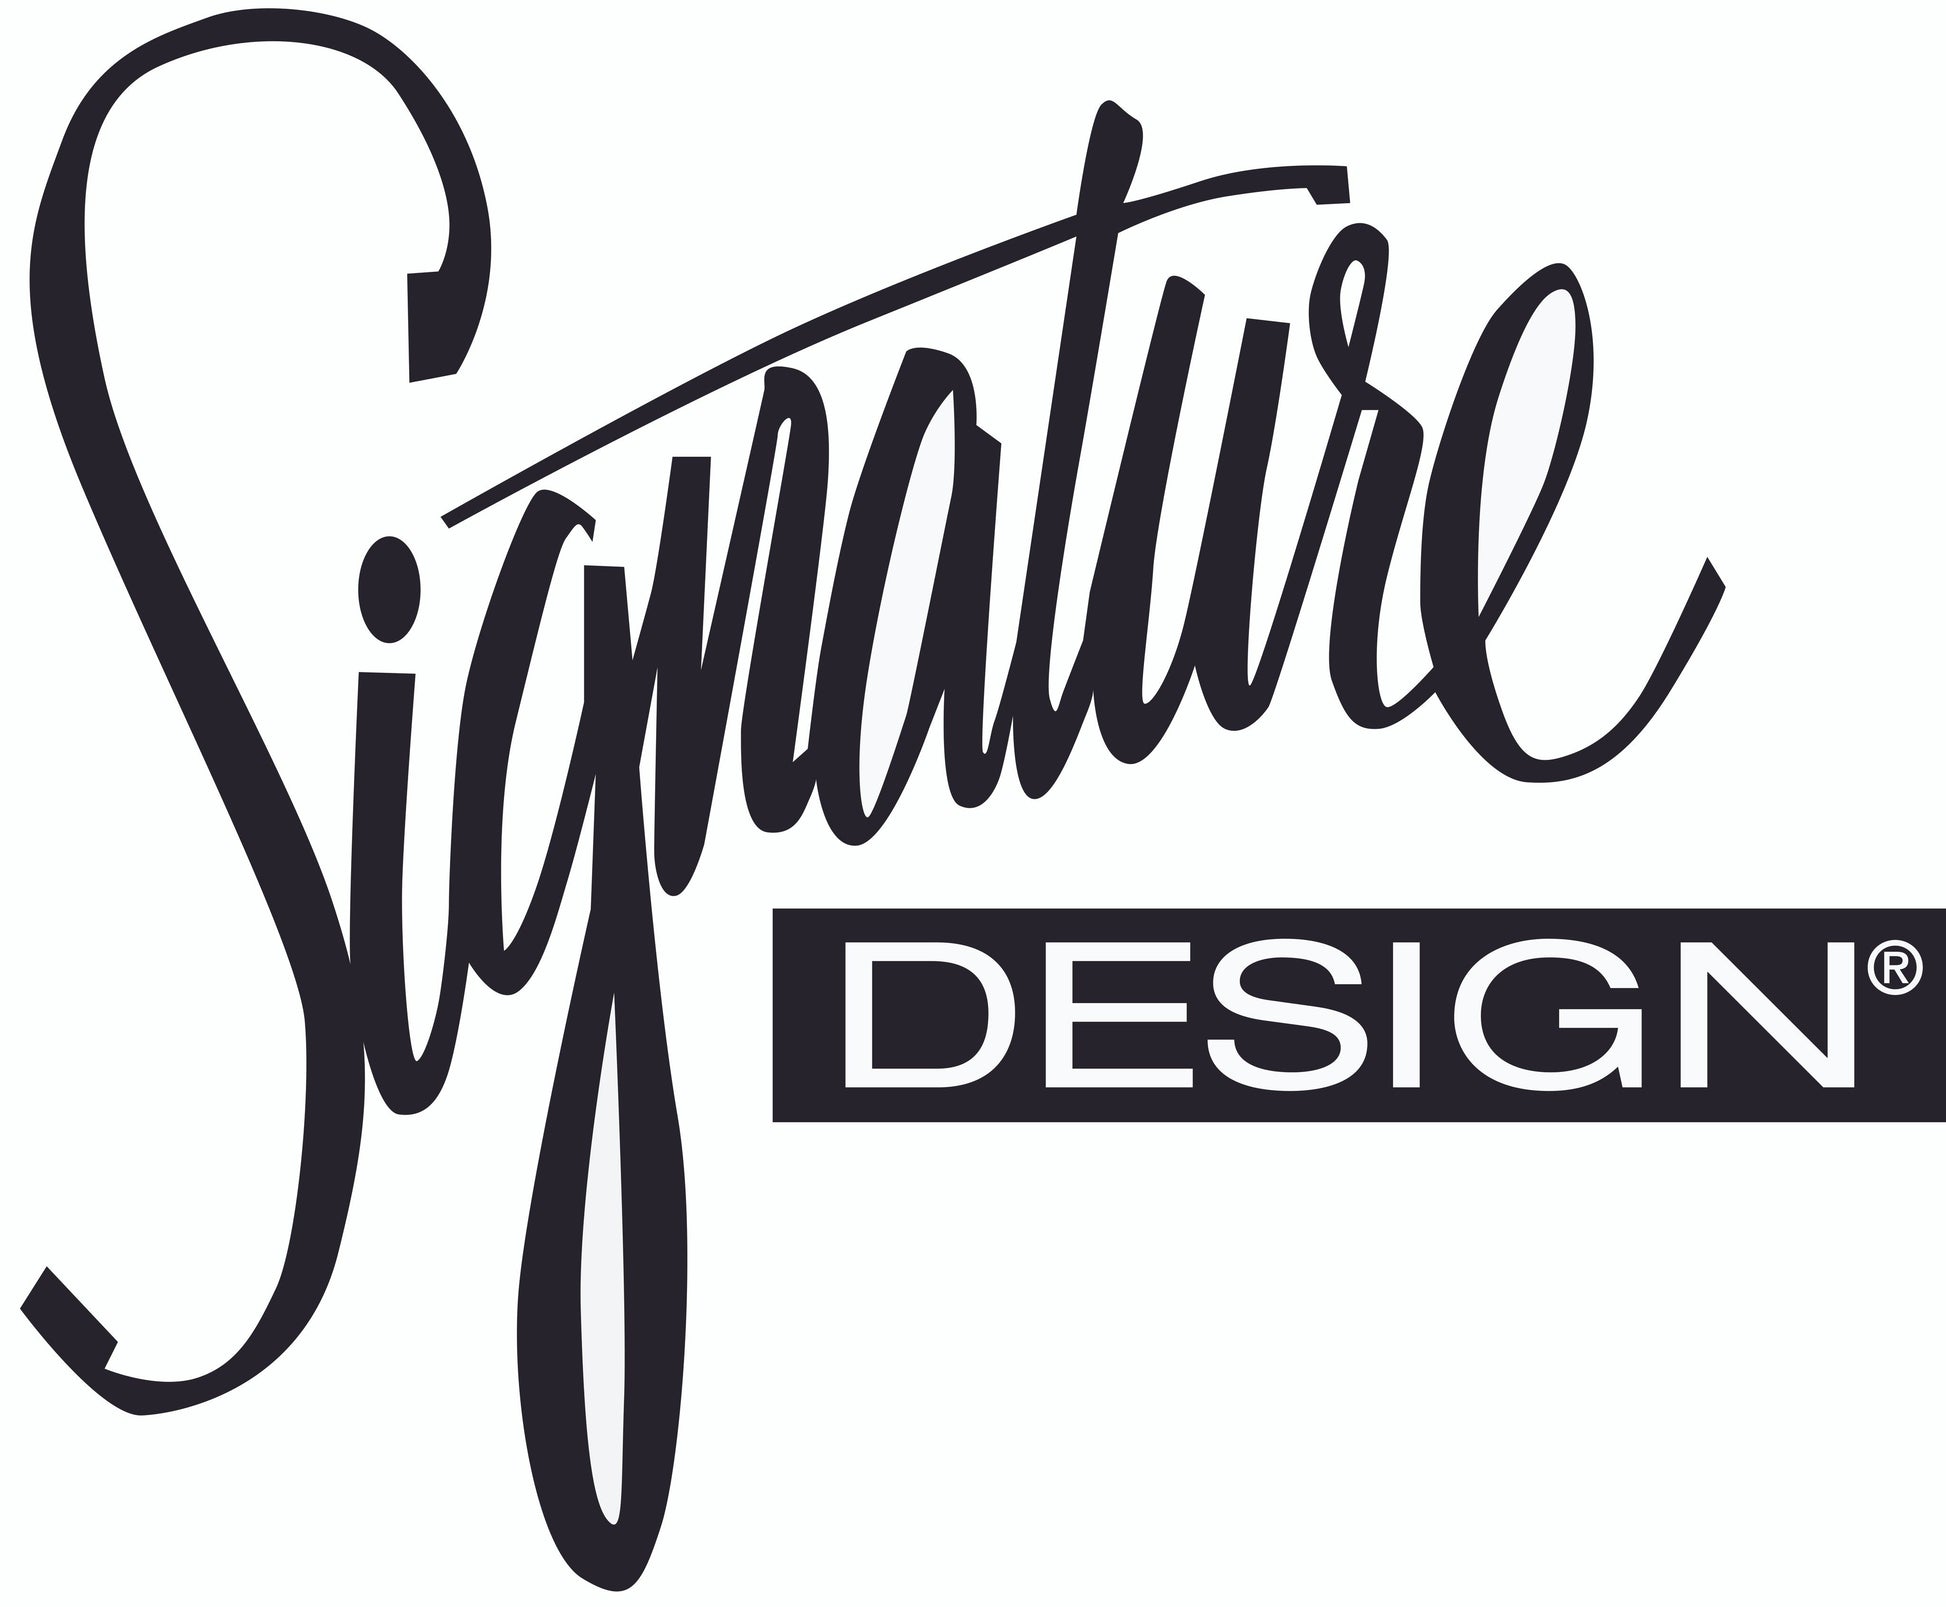 Lynxtyn Adjustable Height Desk Signature Design by Ashley®